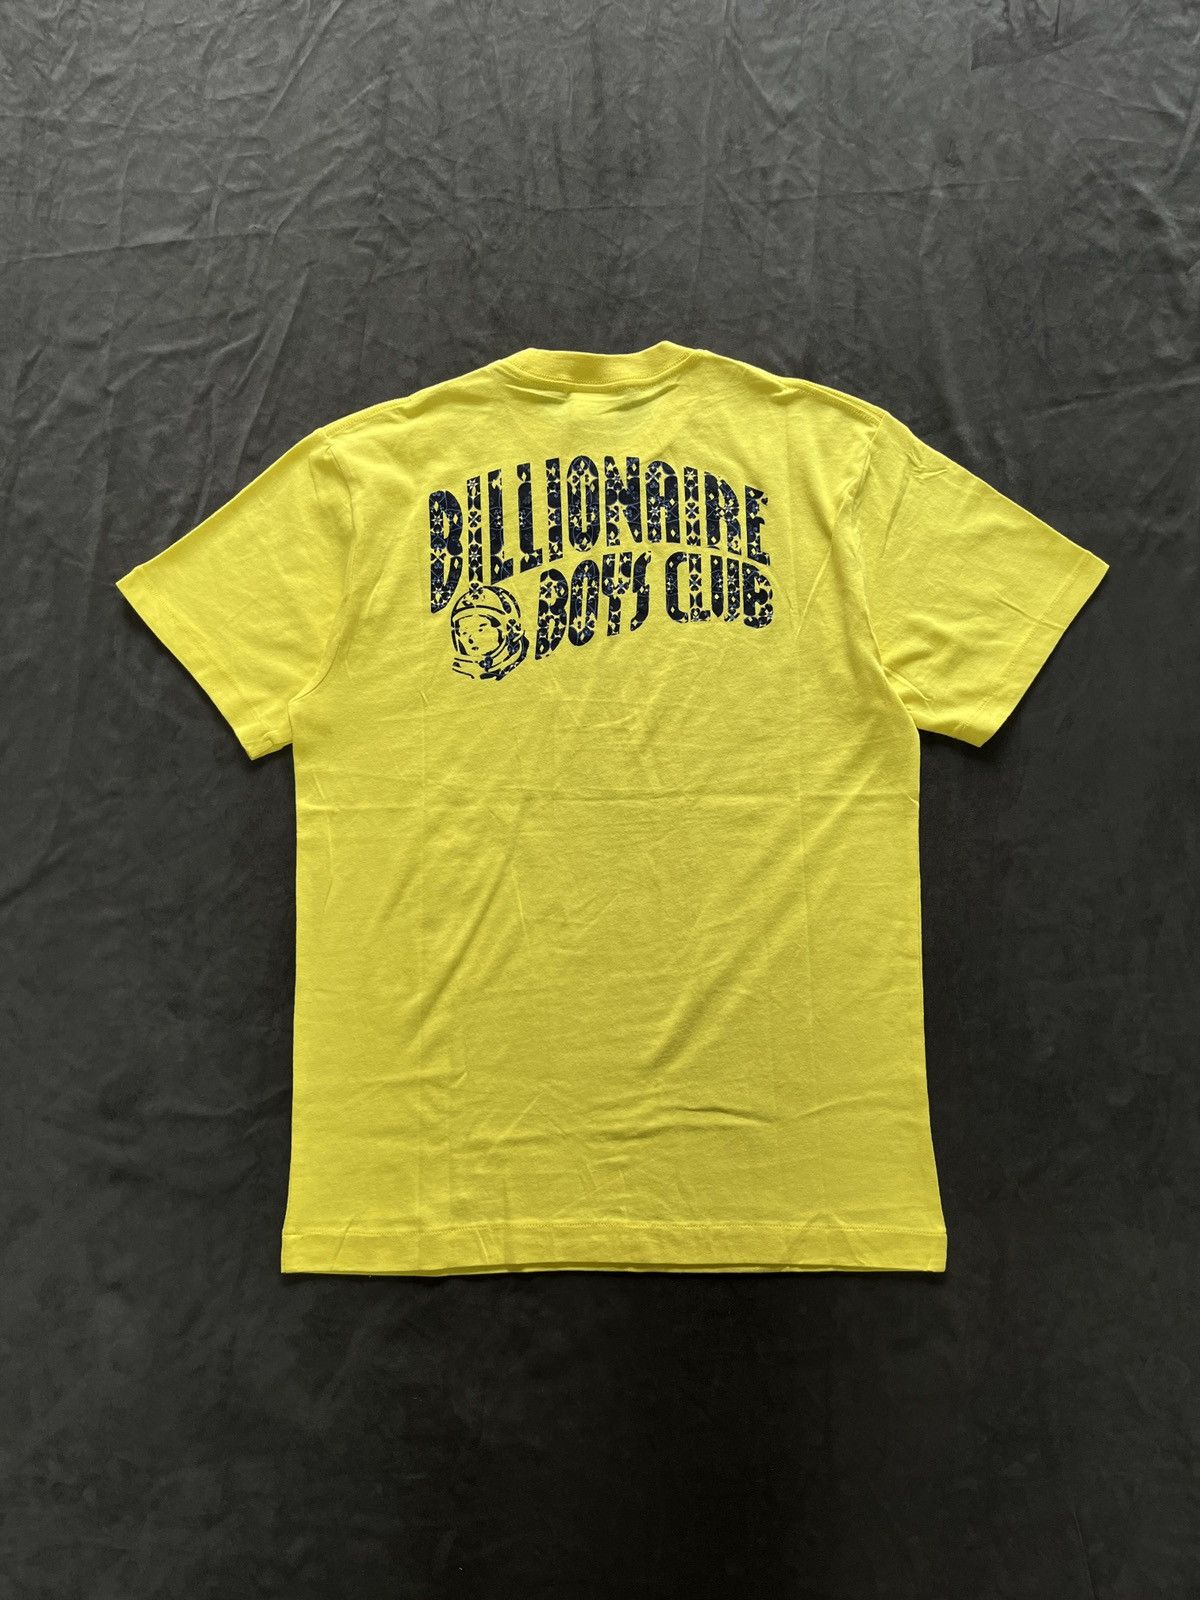 Rare Billionaire Boys Club BBC Helmet Logo Yellow T-Shirt M - 5